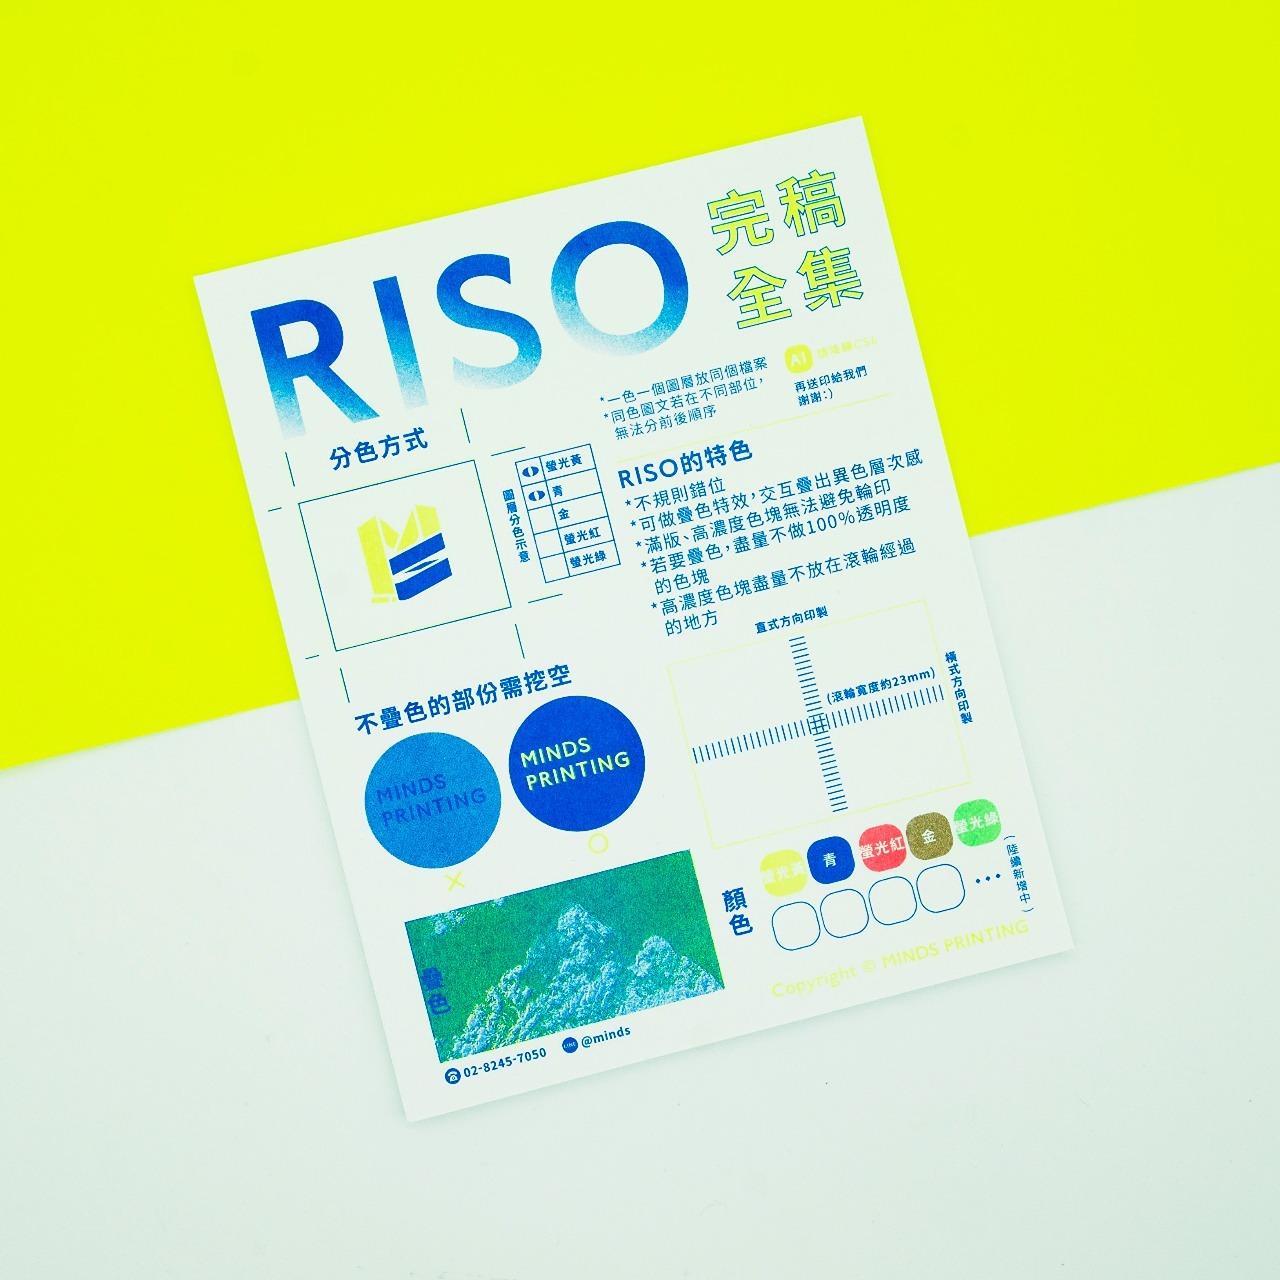 MINDS Printing - 麥思印刷 RISO完稿全集 / RISO完稿資訊